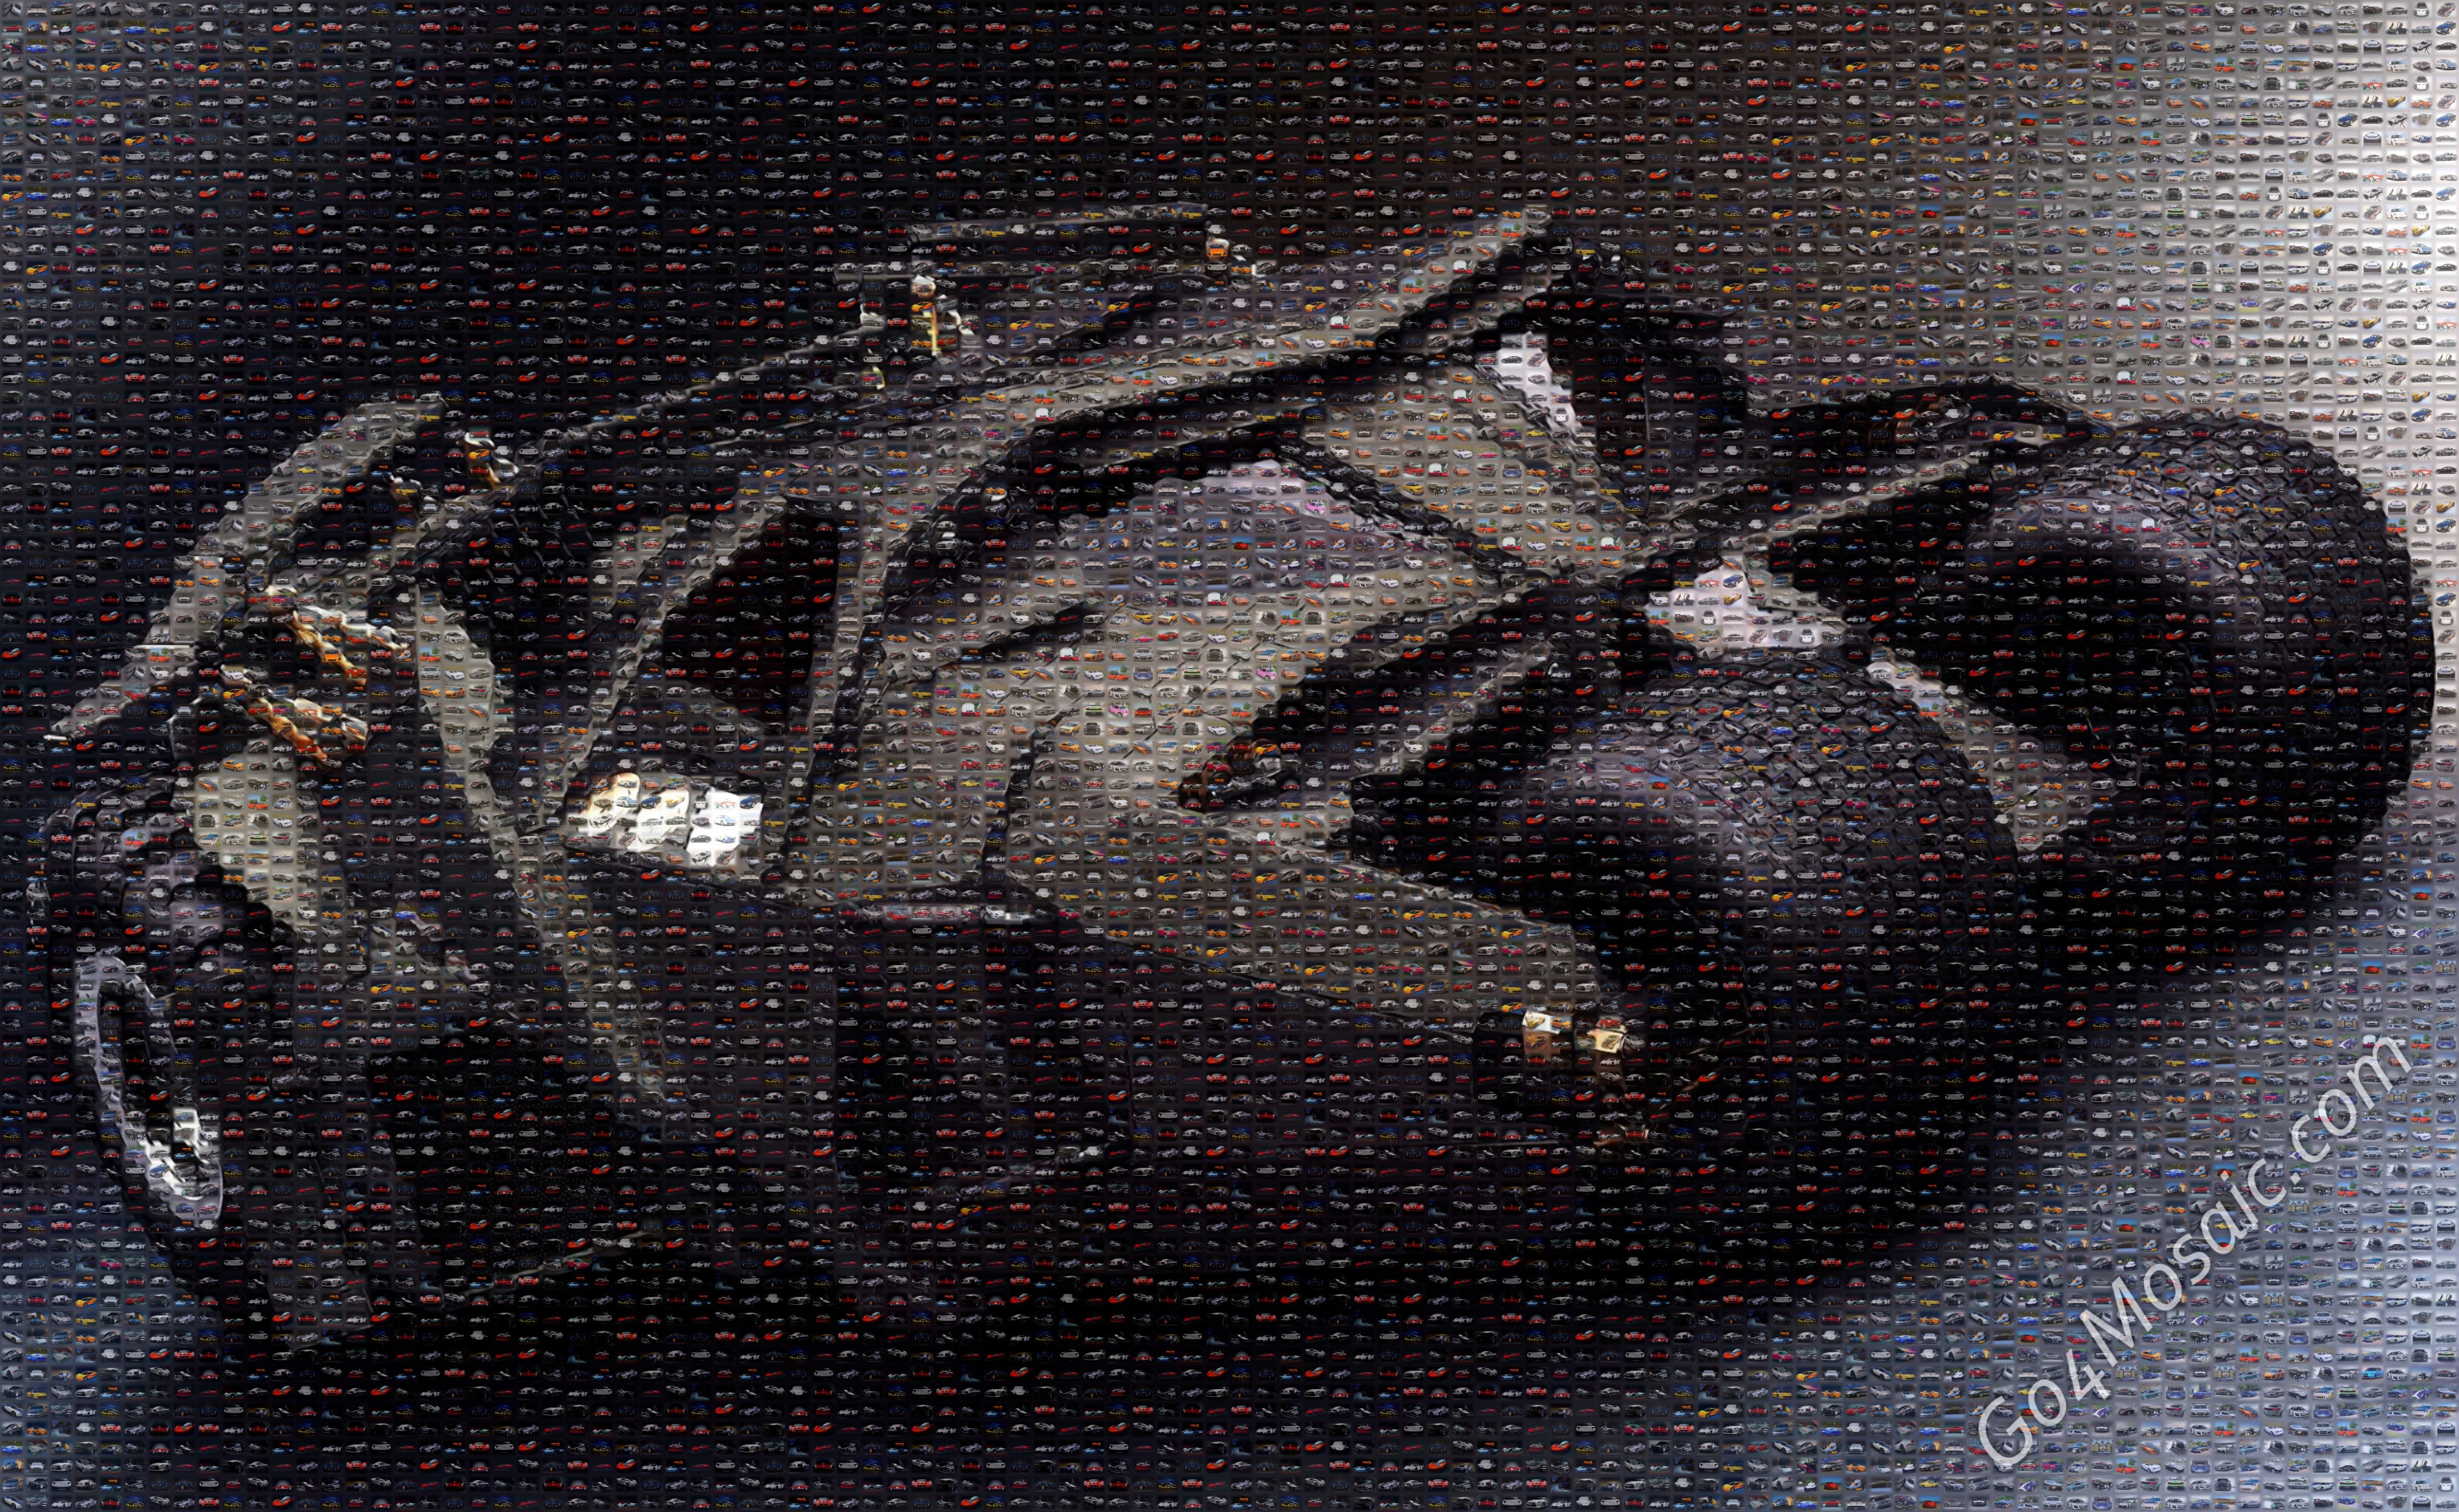 Batmobile mosaic from Cars